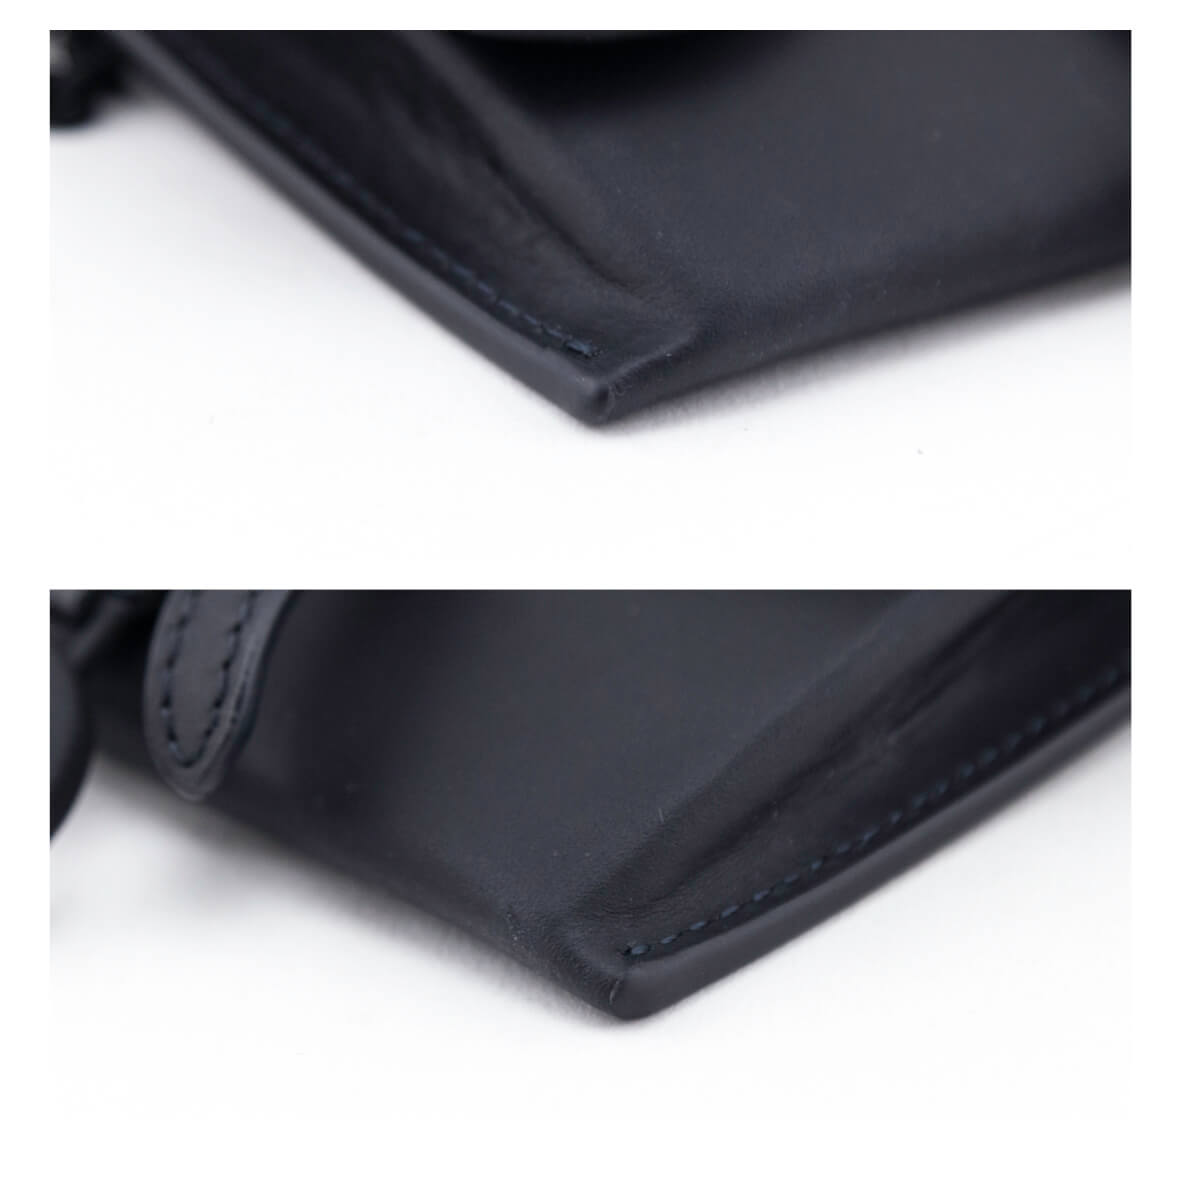 Dior Black Ultra Matte Calfskin Nano Saddle Chain Pouch - Shop Dior CA